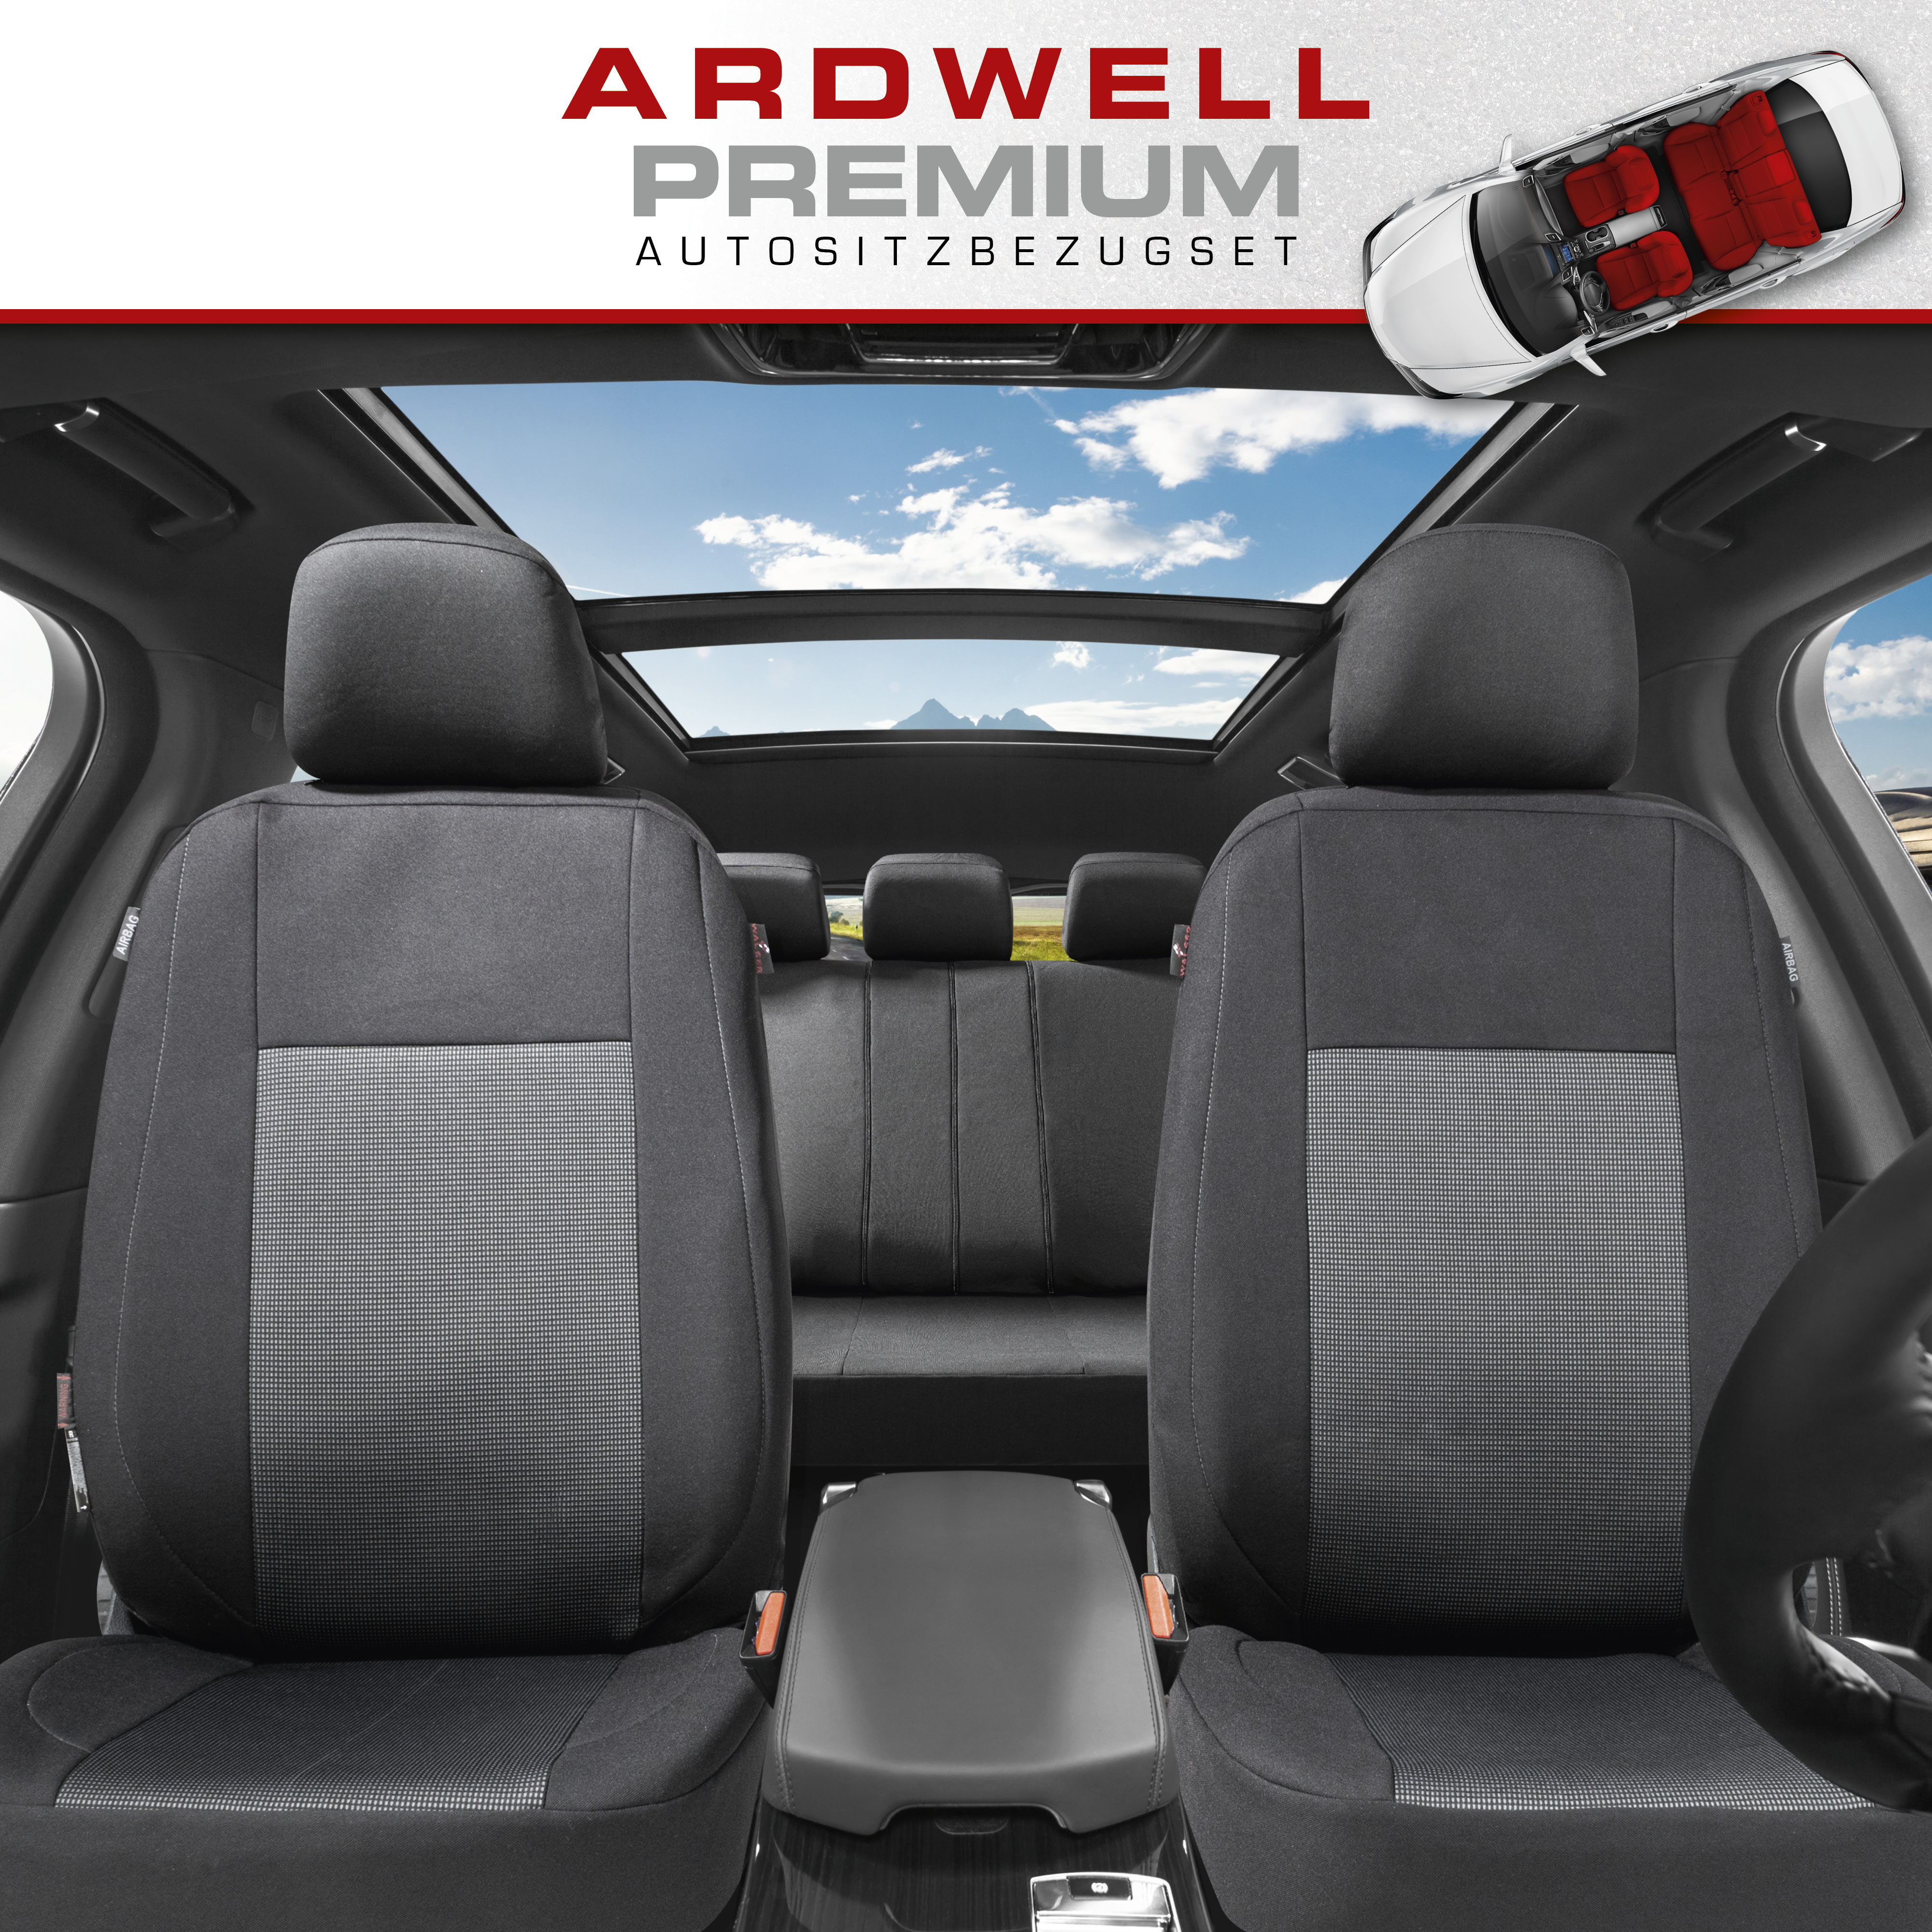 Autositzbezug Ardwell PKW Motorrad | ADAC Online-Shop & | Autozubehör-Konfigurator Komplettset 